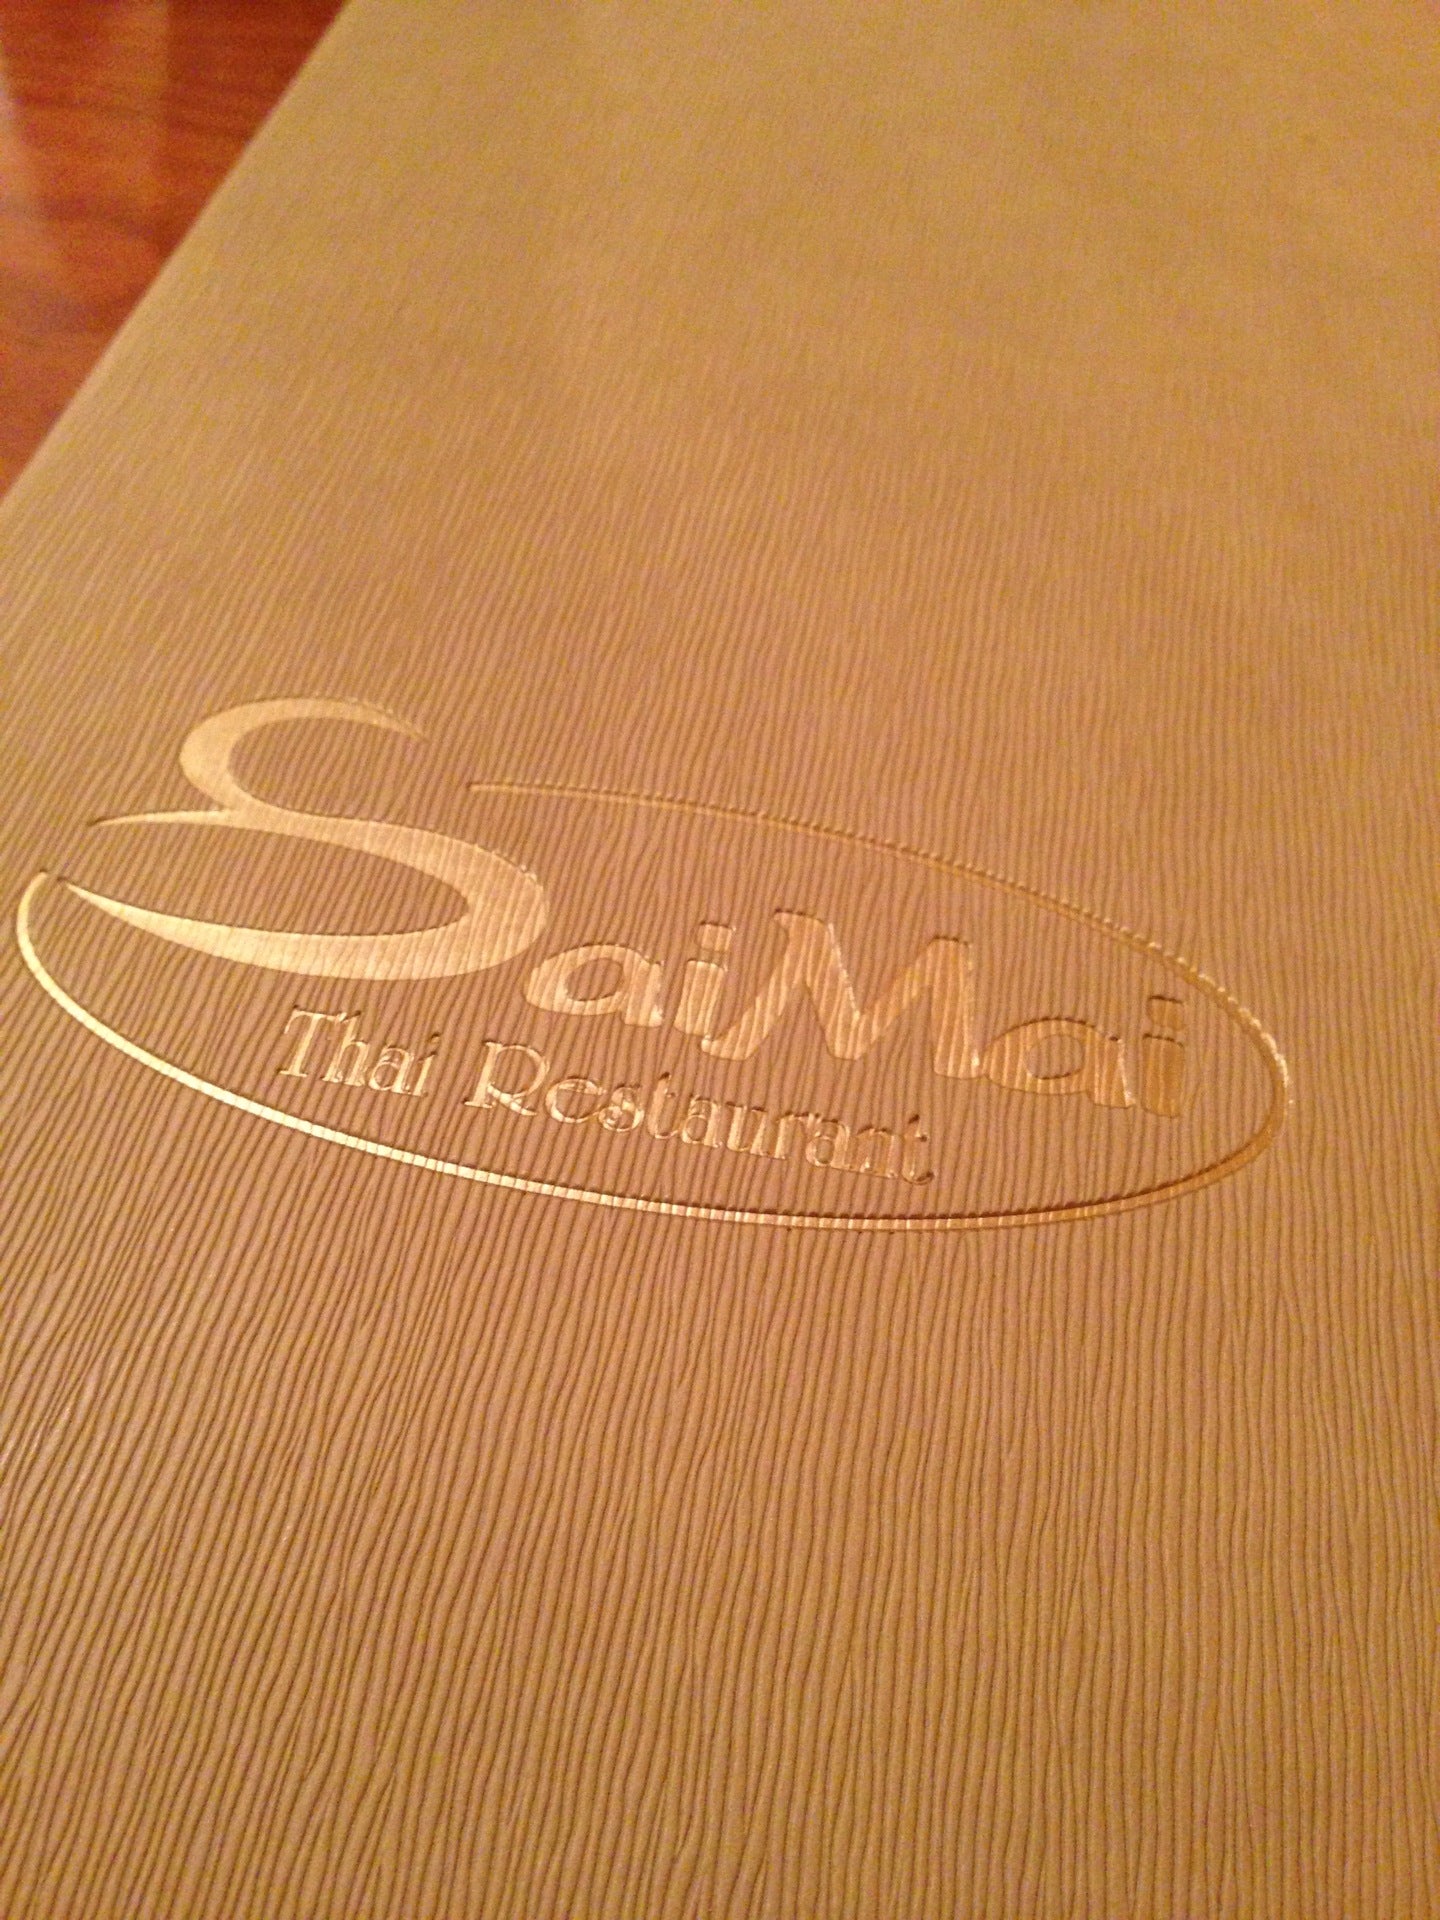 Illinois Chicago SaiMai Thai Restaurant photo 5